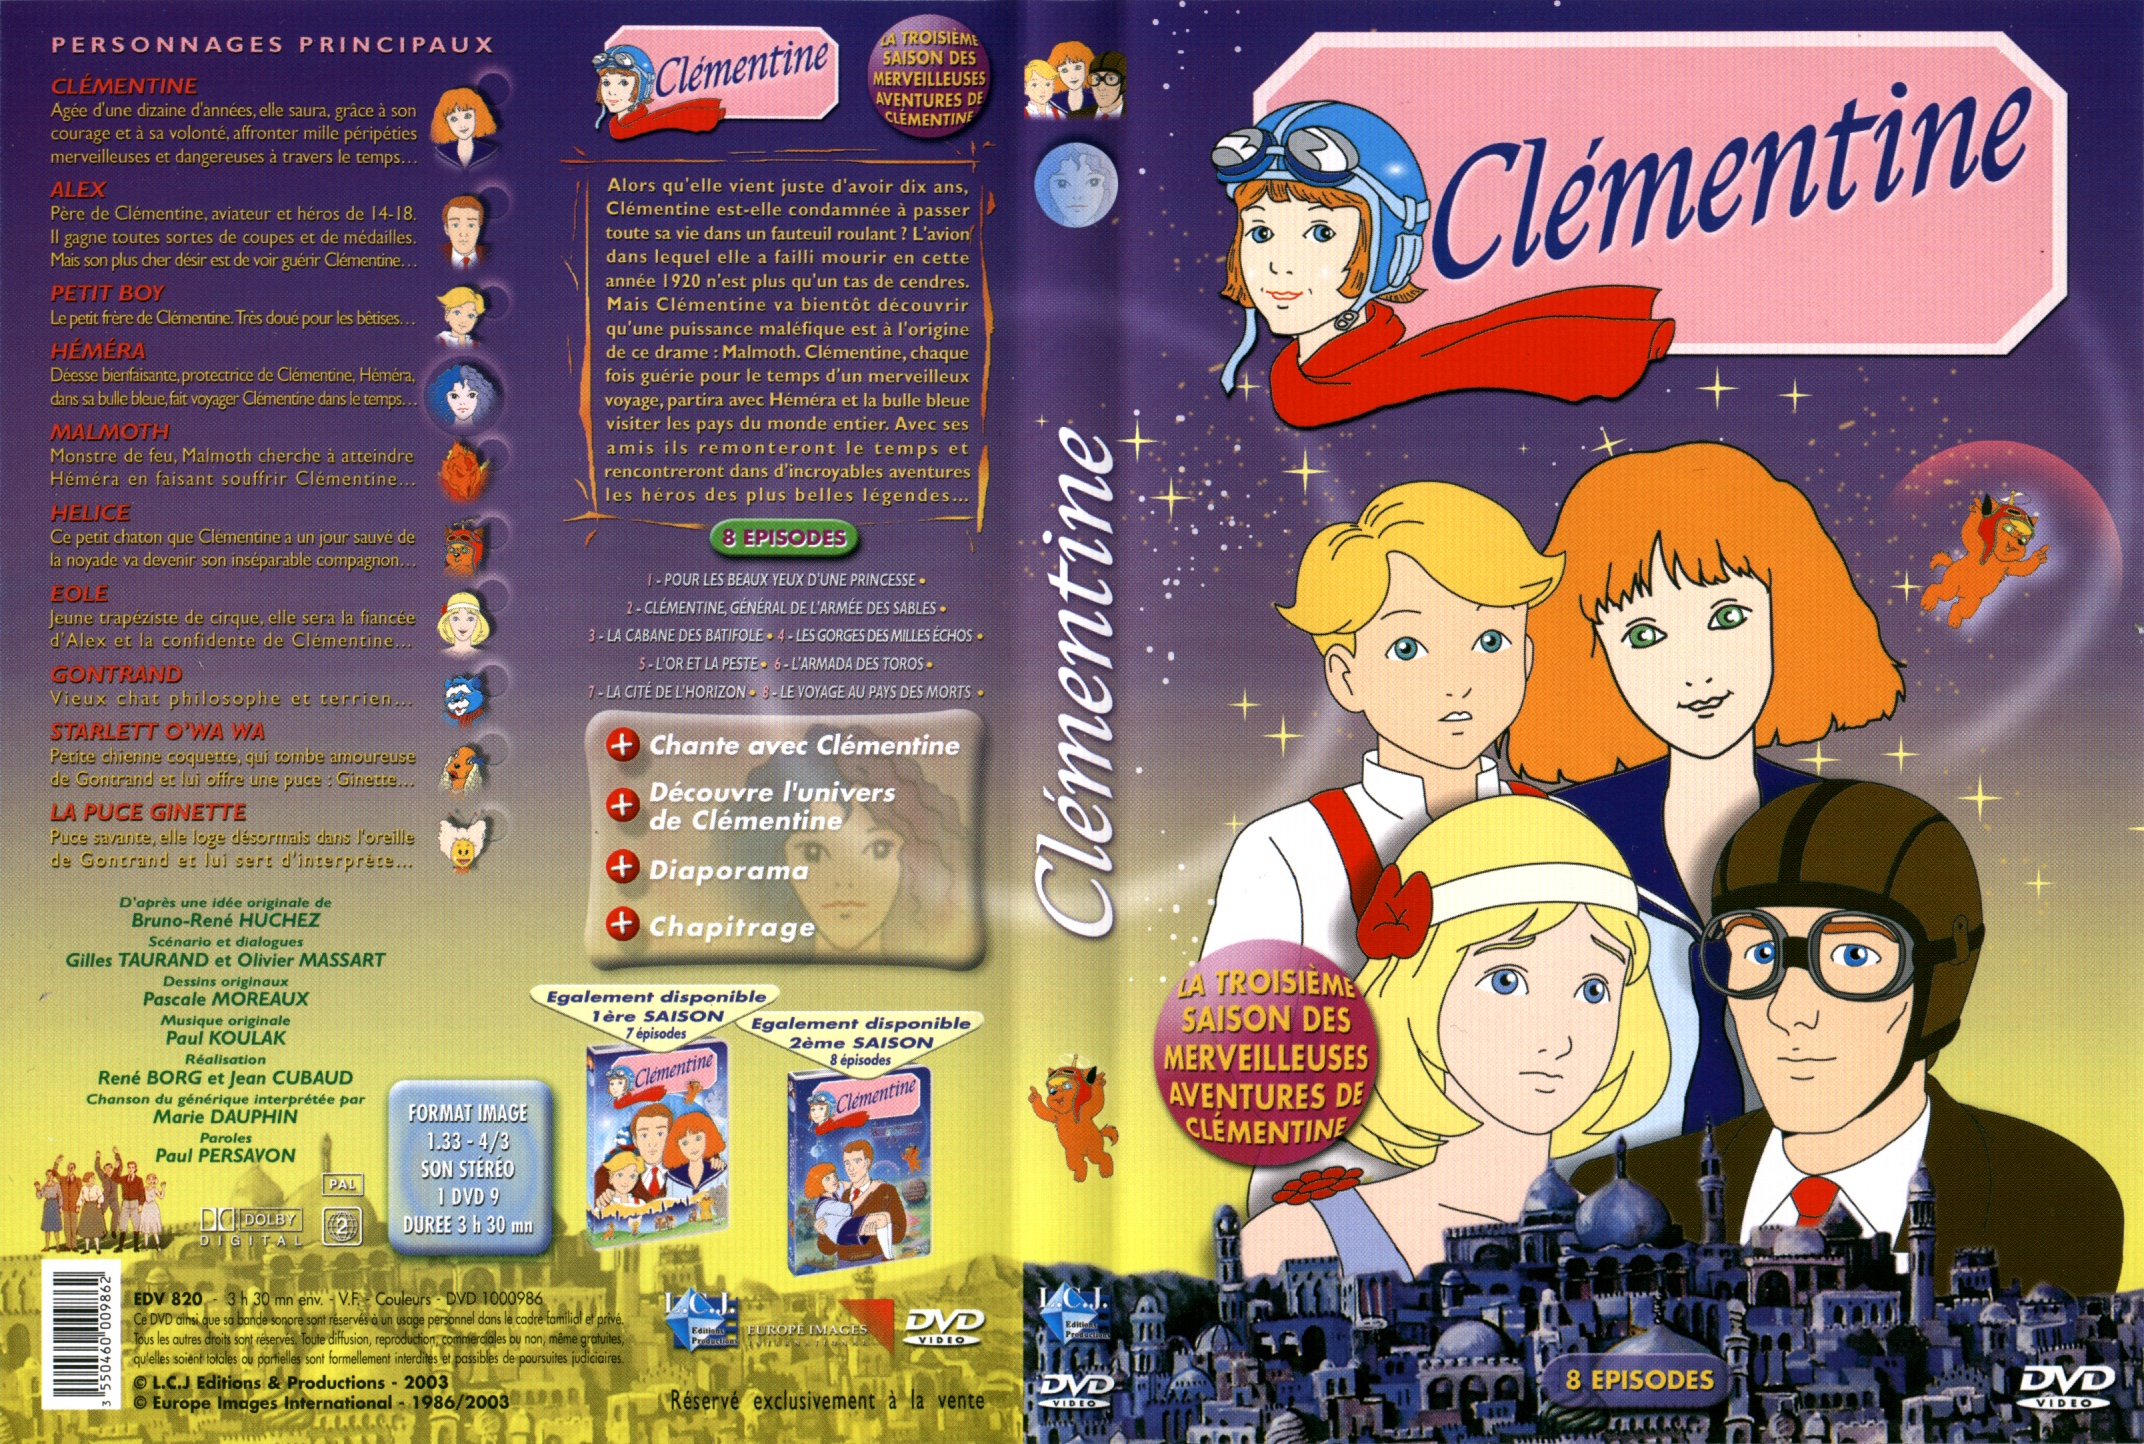 Jaquette DVD Clmentine vol 3